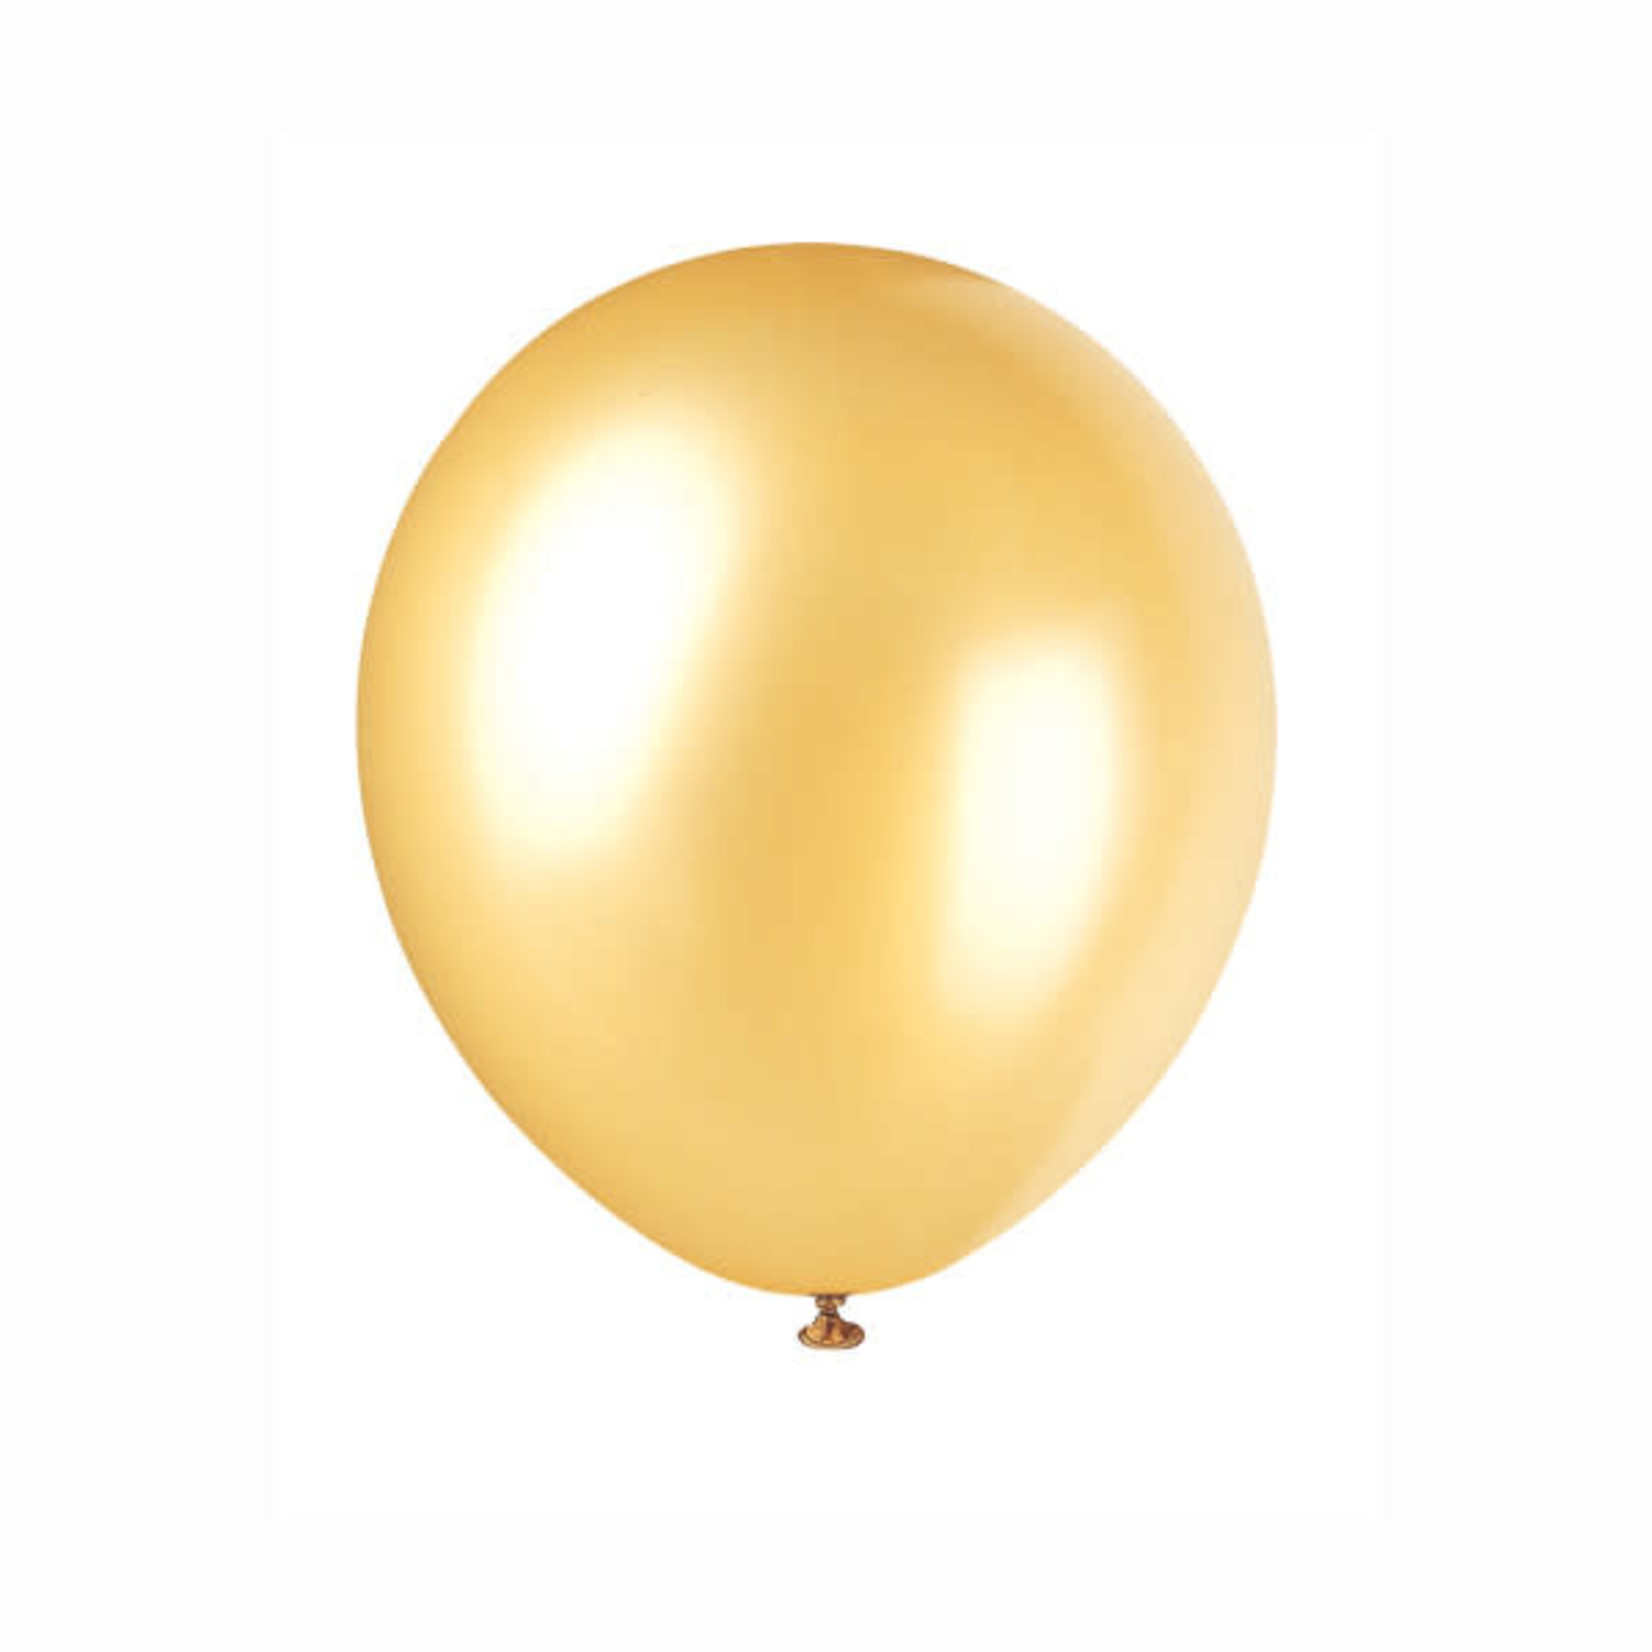 72  12"" Pearl Balloons - Gold, reg $9.99